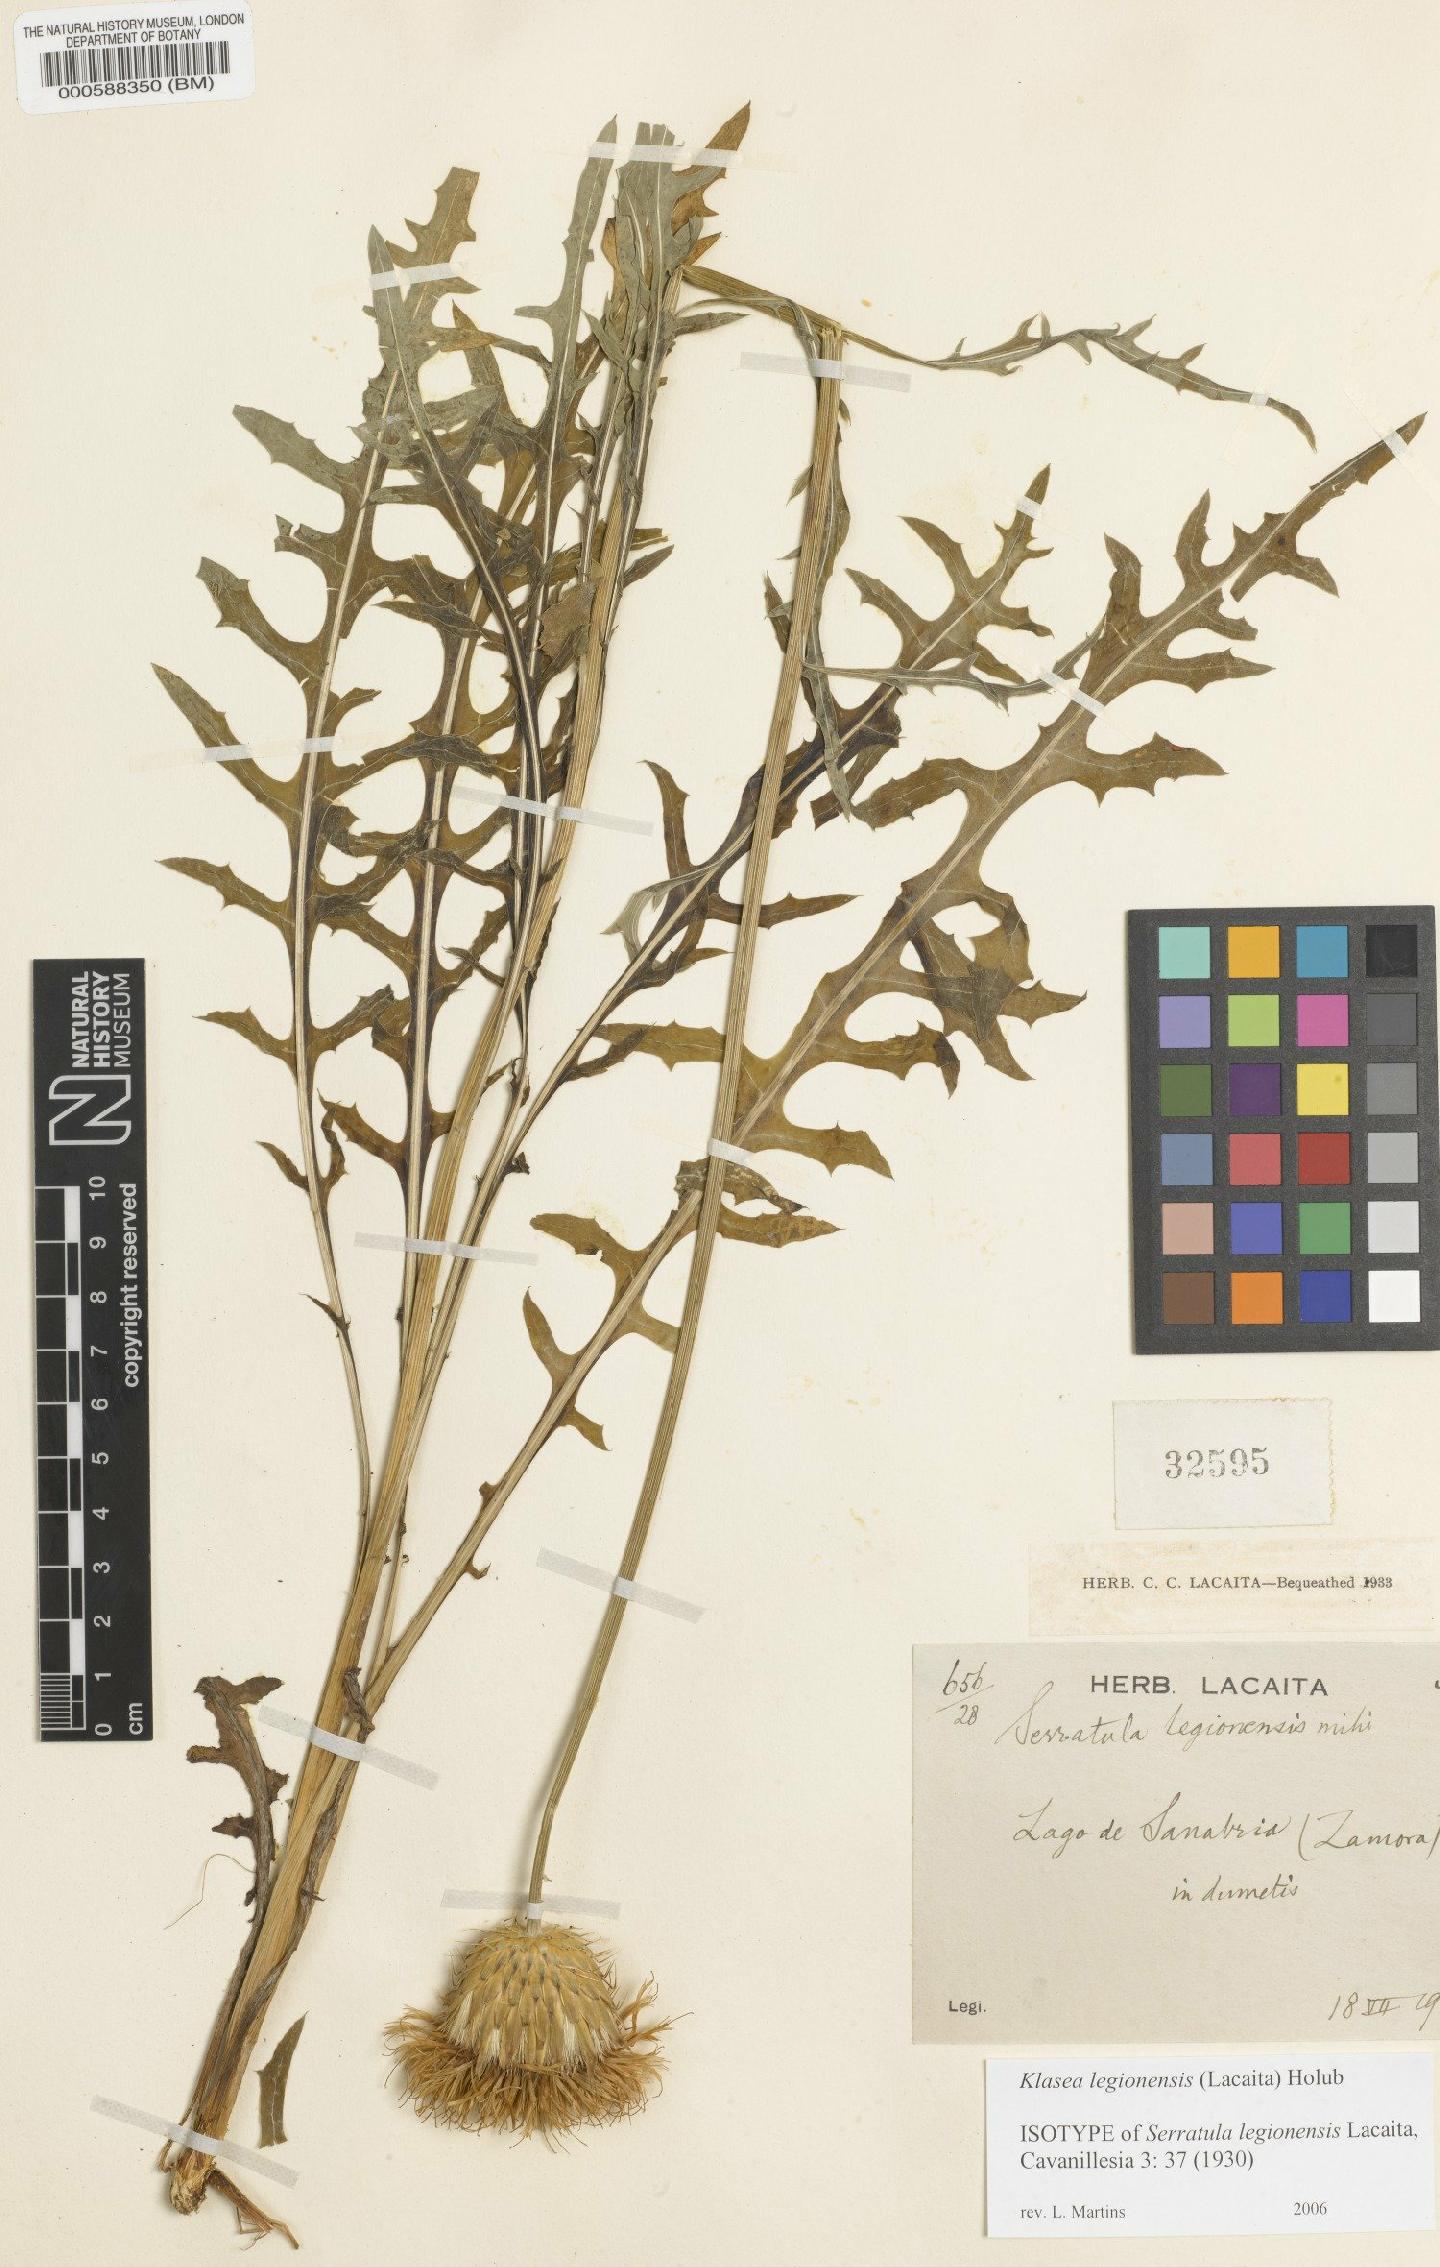 To NHMUK collection (Serratula legionensis Lacaita; Isotype; NHMUK:ecatalogue:4689508)